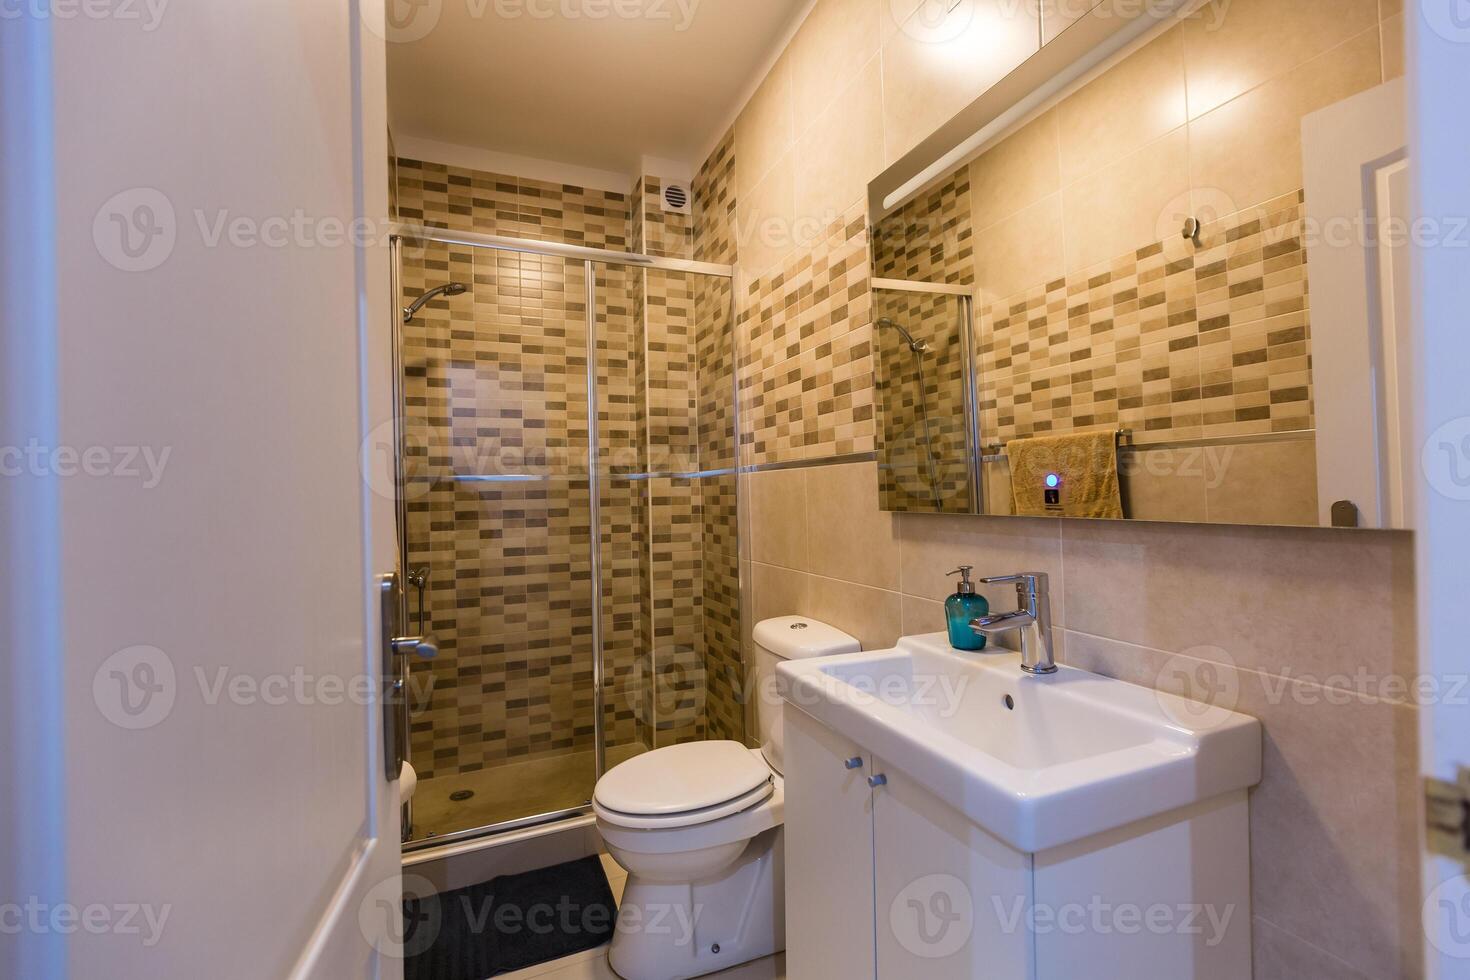 Spacious bathroom in gray tones with heated floors, walk-in shower, double sink vanity. photo